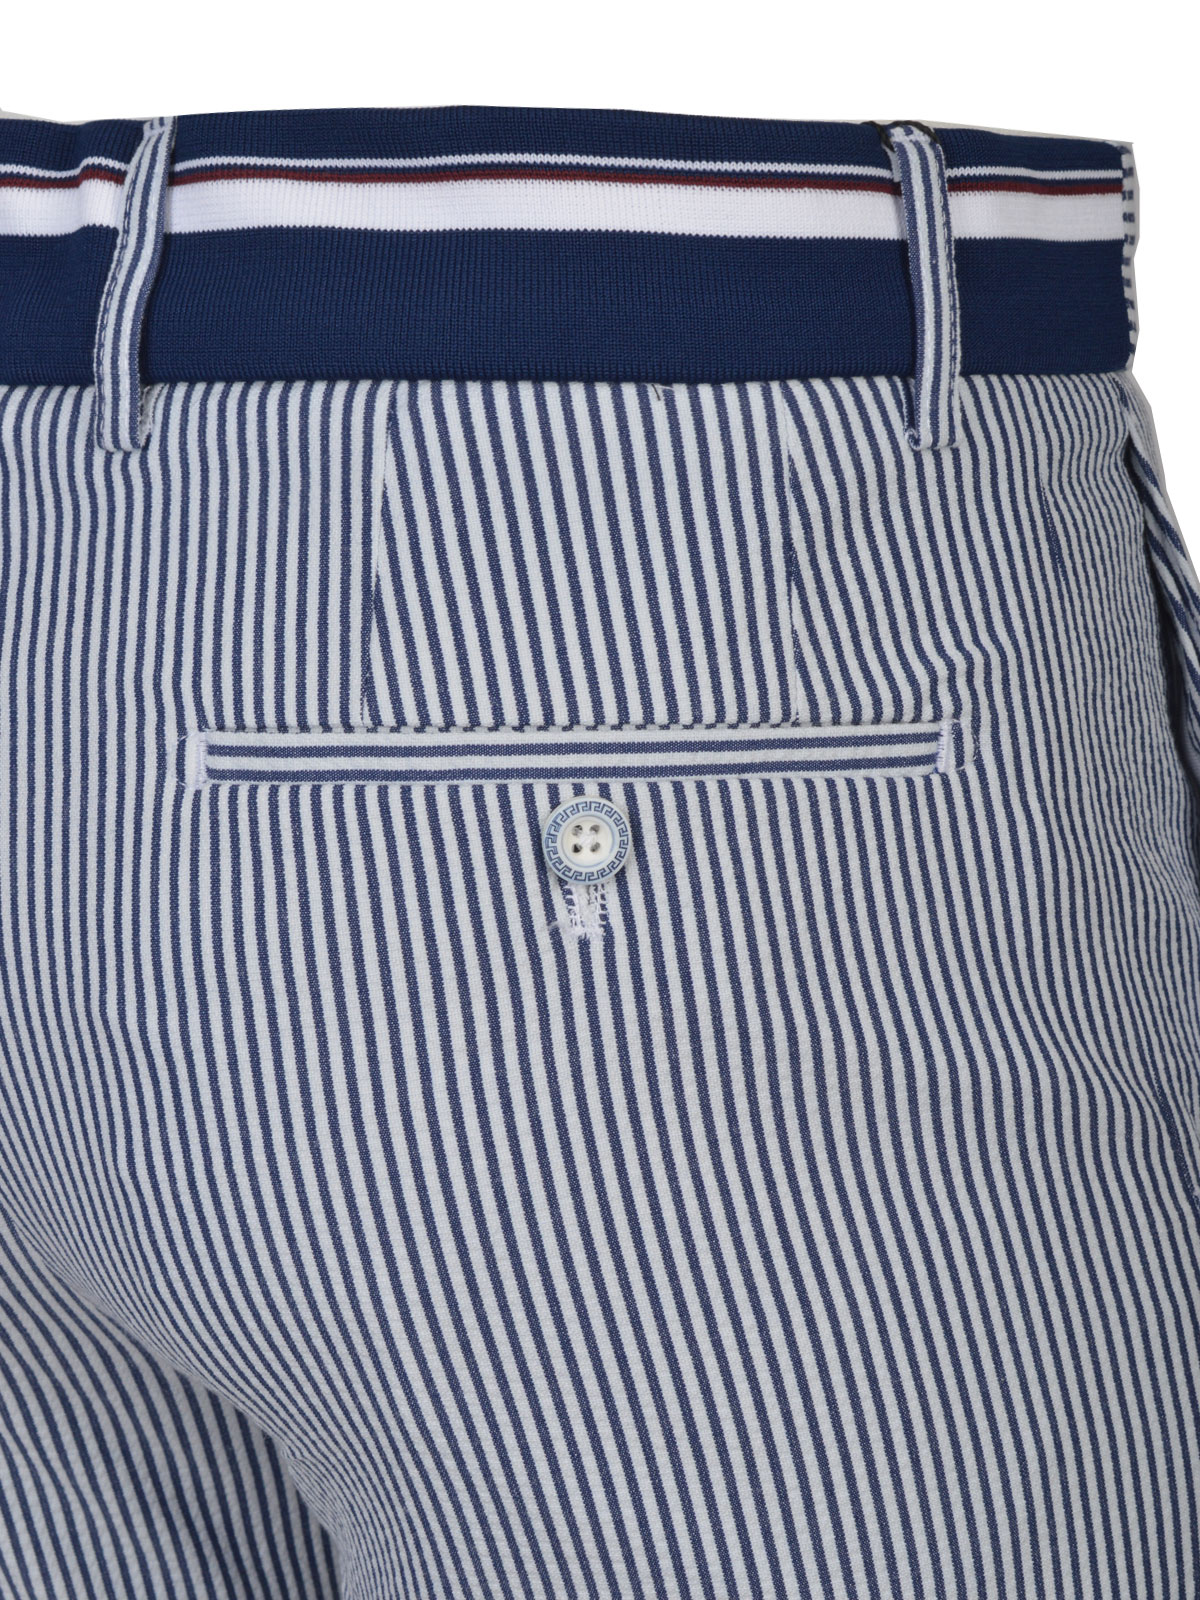 Bermuda shorts in white on a blue stripe - 67078 € 38.24 img3